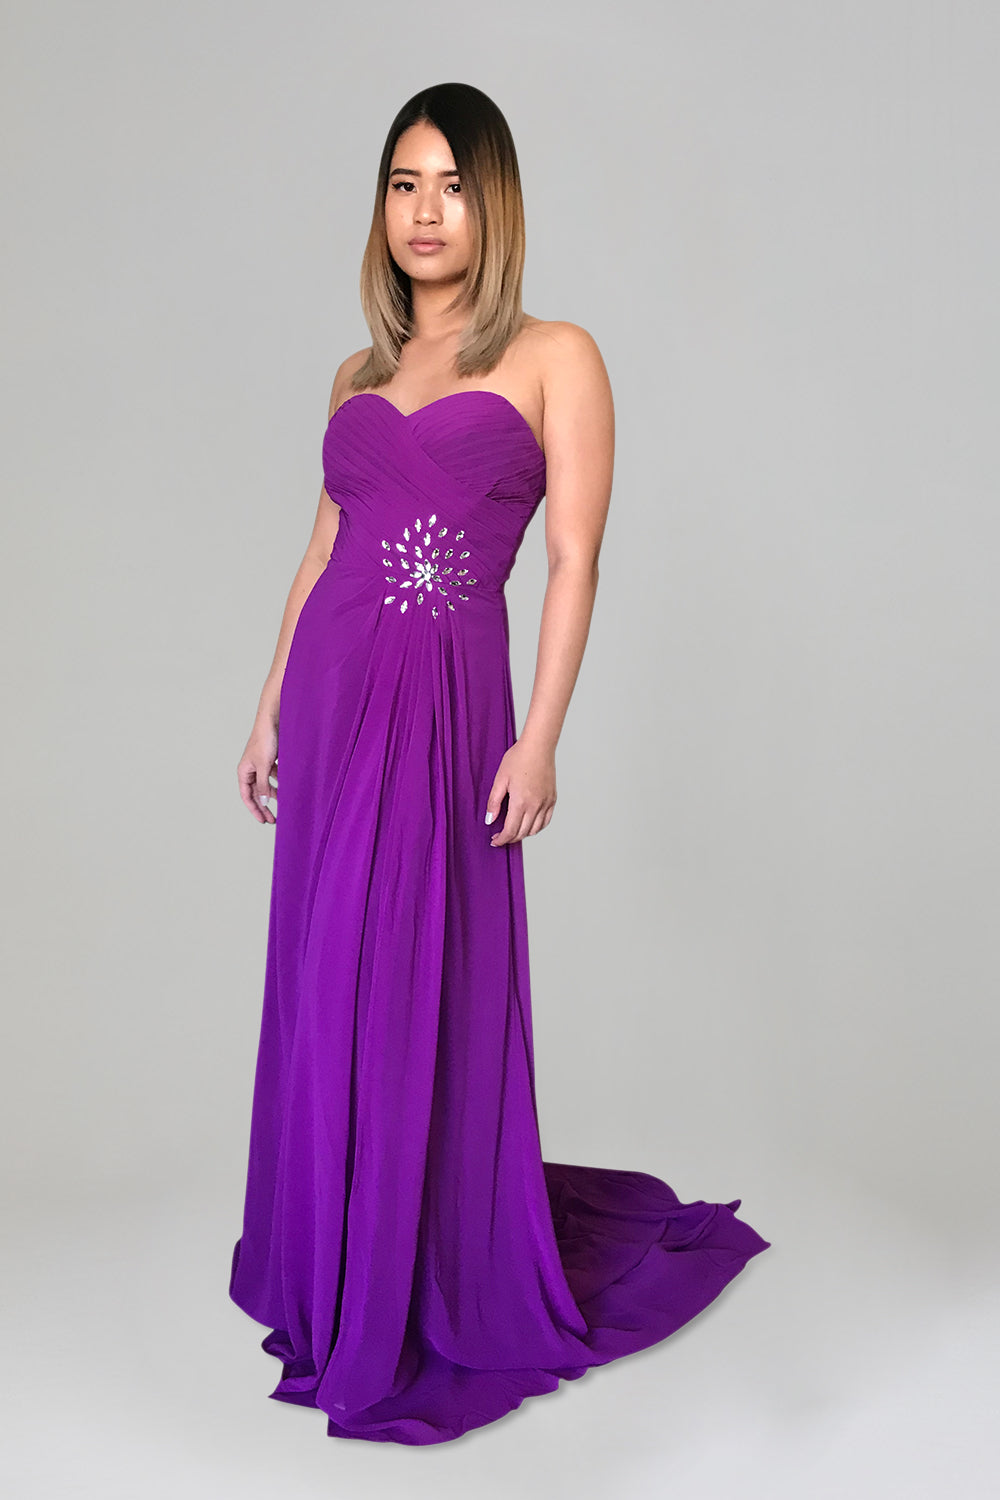 custom purple flowy bridesmaid dresses australia dressmaker envious bridal & formal